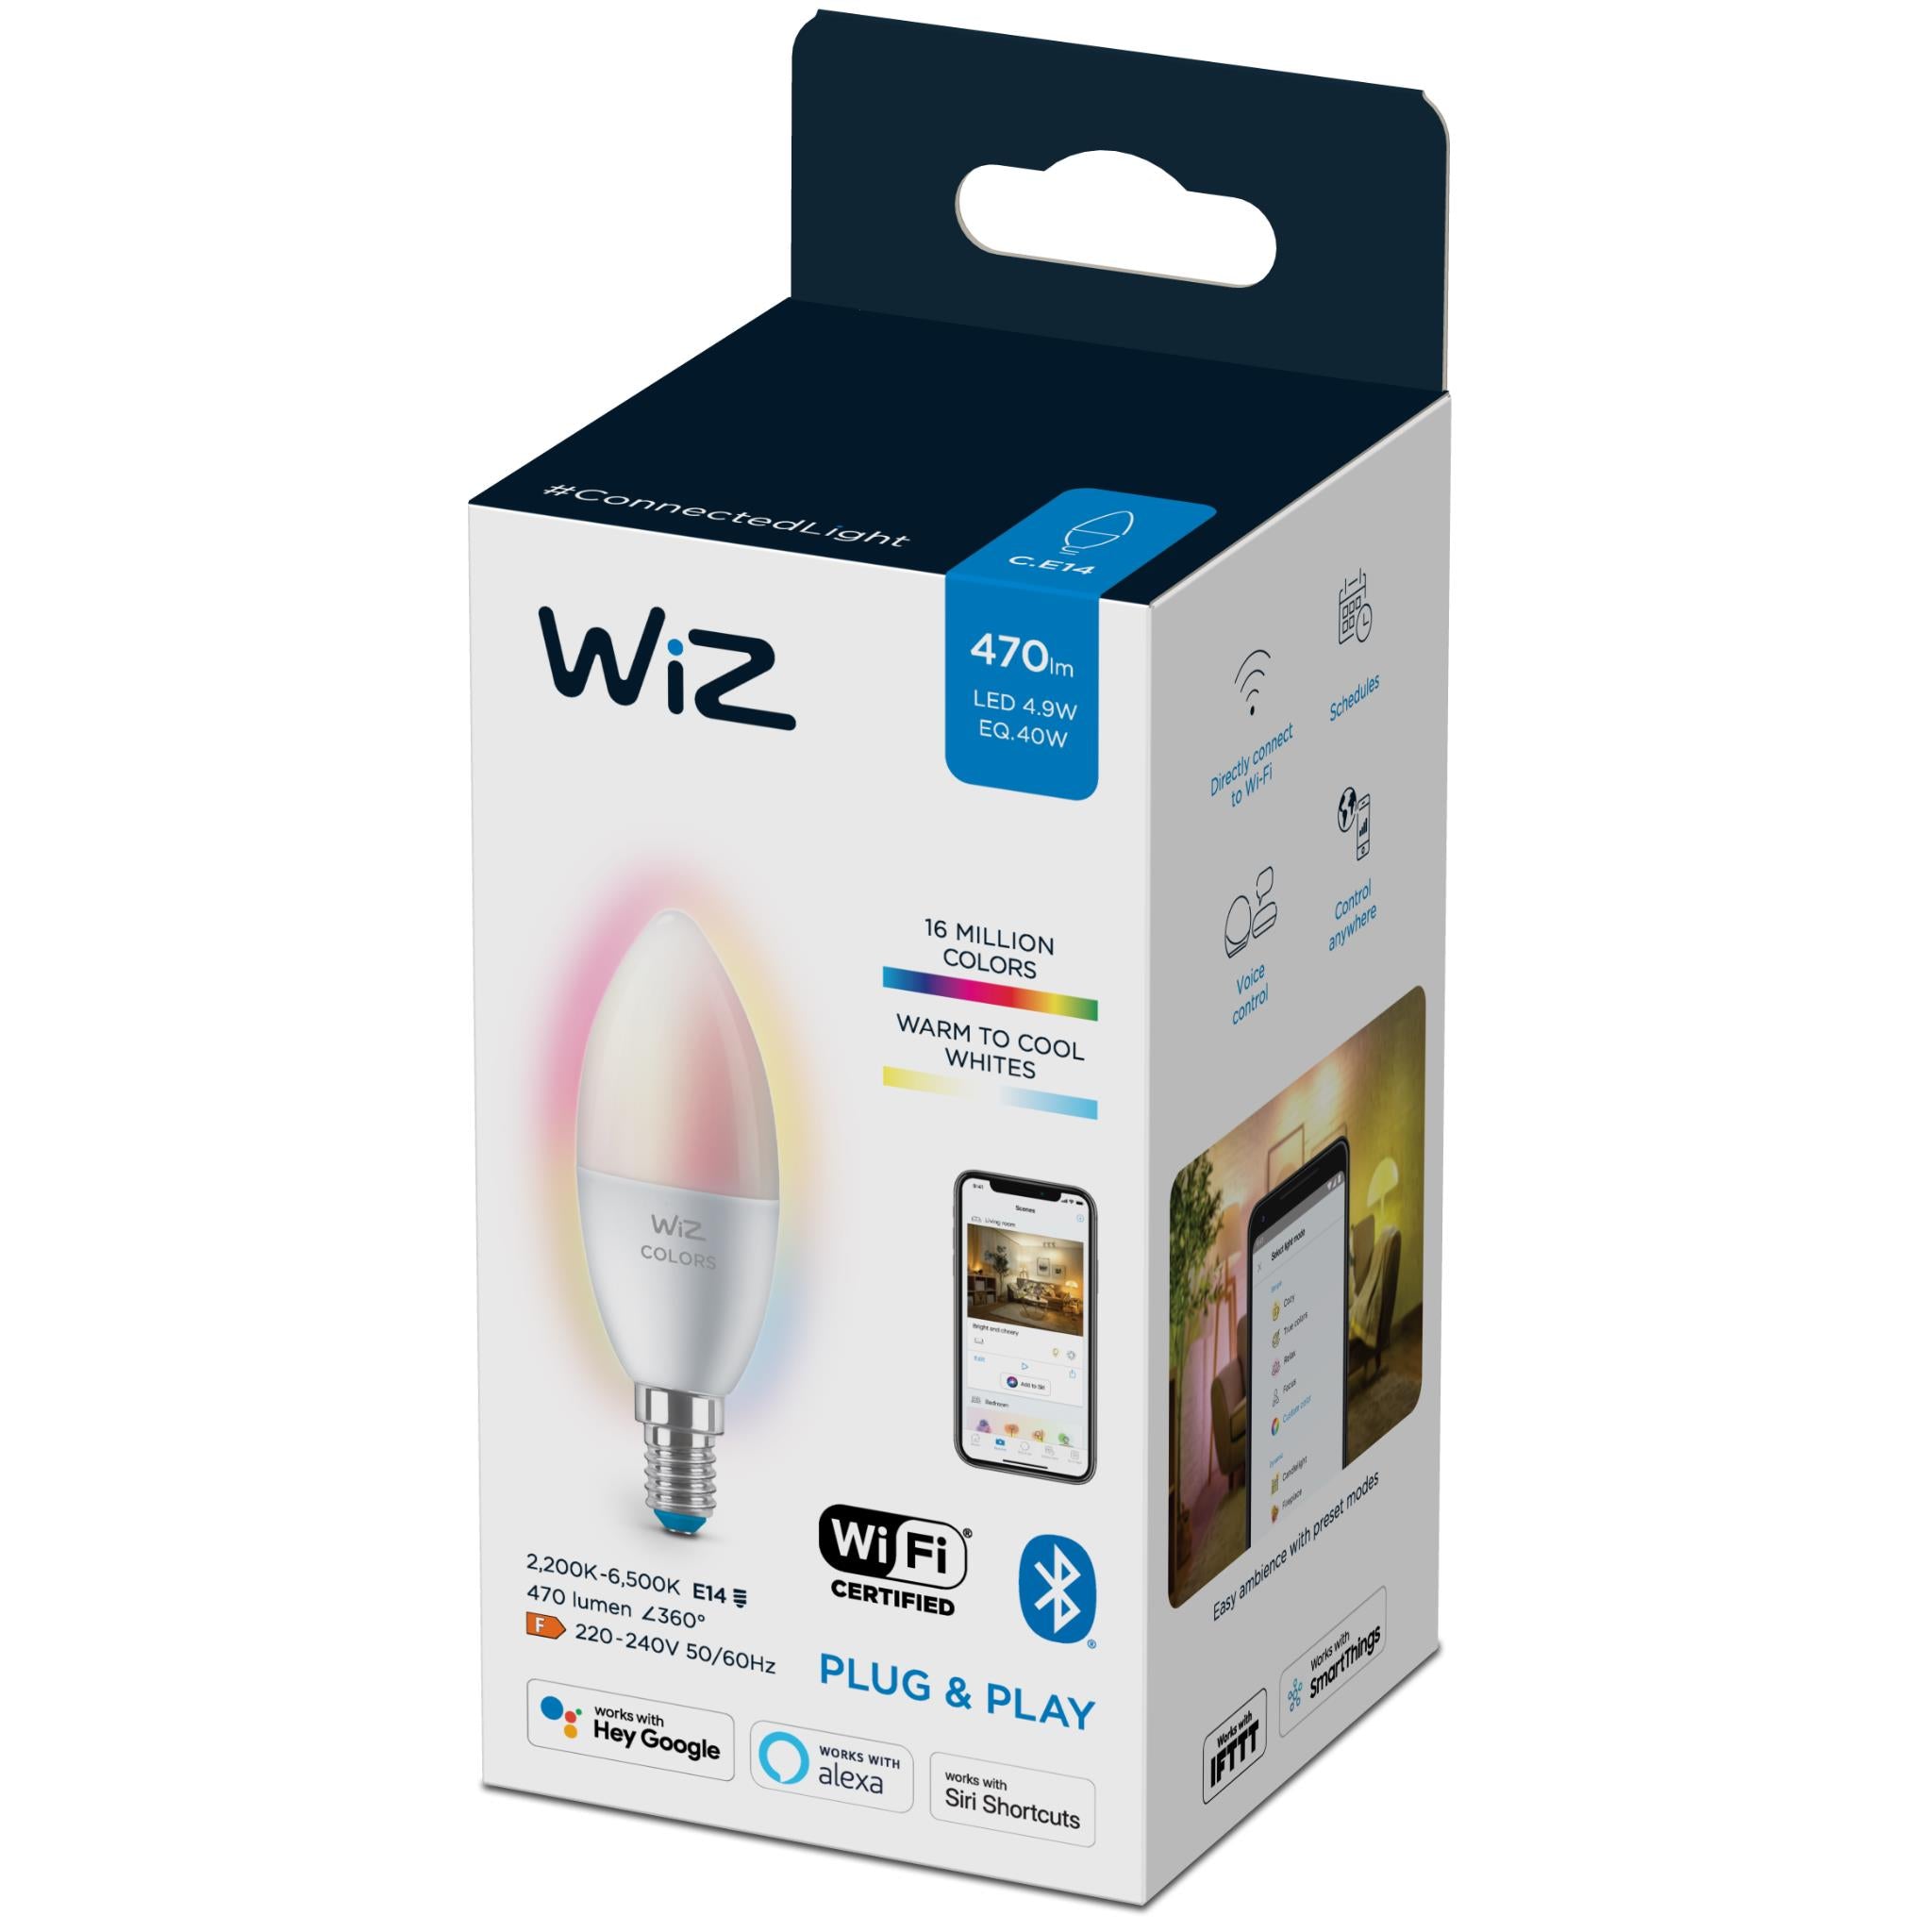 Smart WIFI Light Bulb - Multicolour LED - Blaupunkt